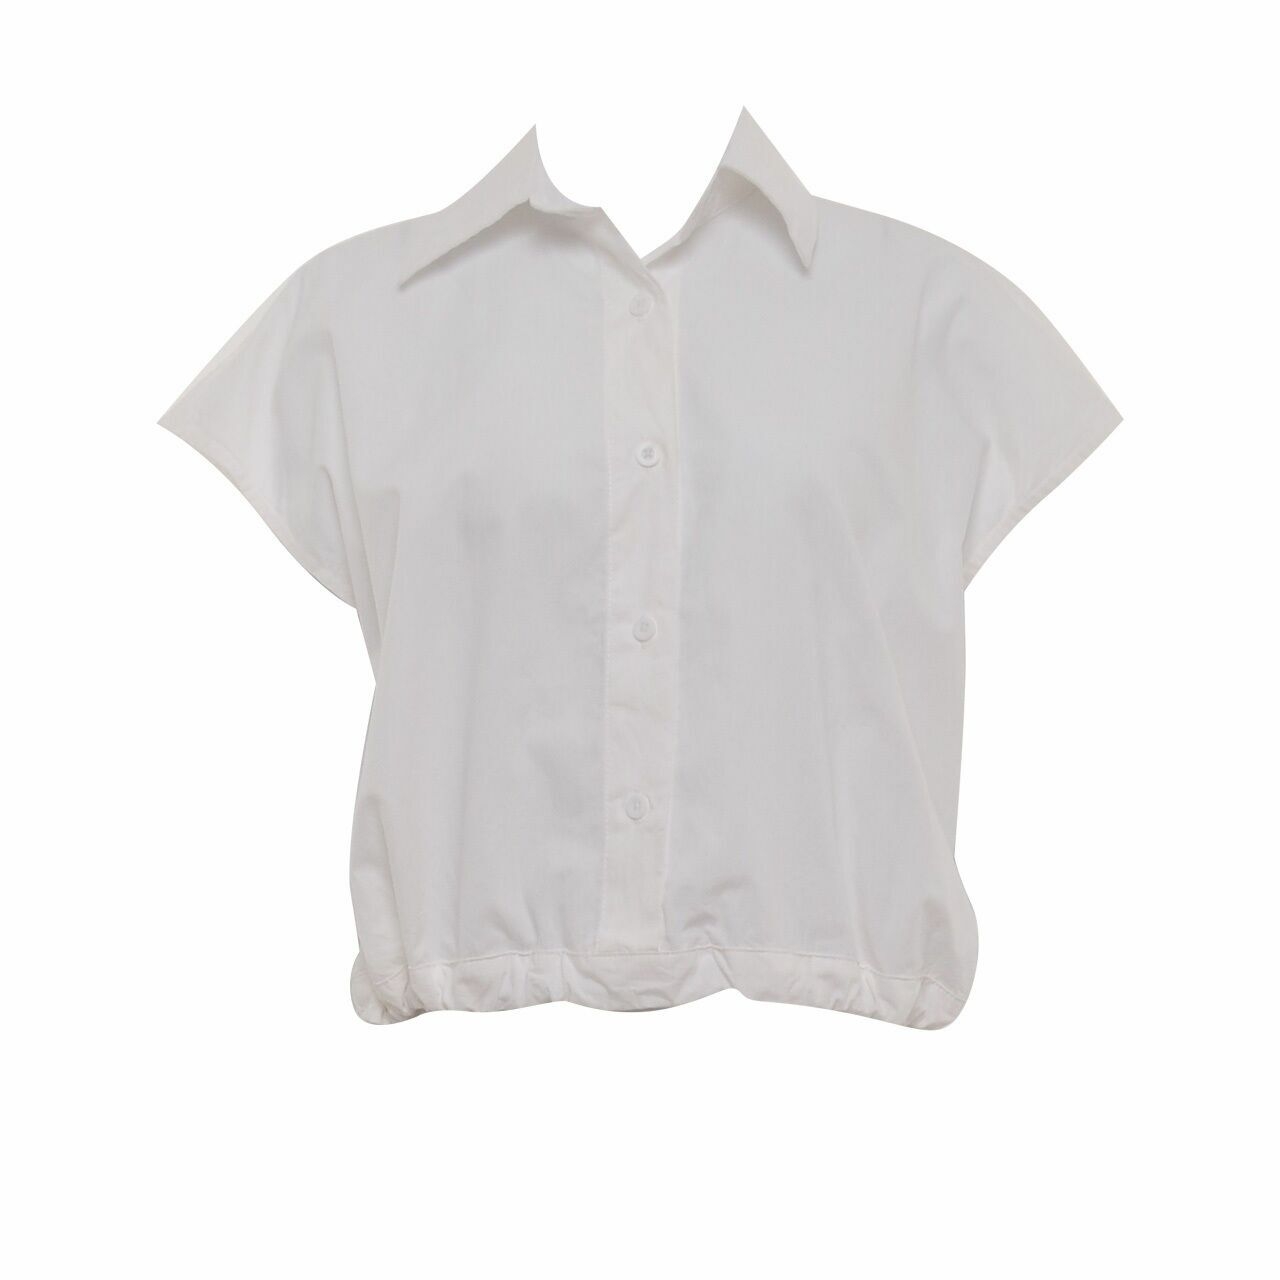 3Mongkis White Shirt